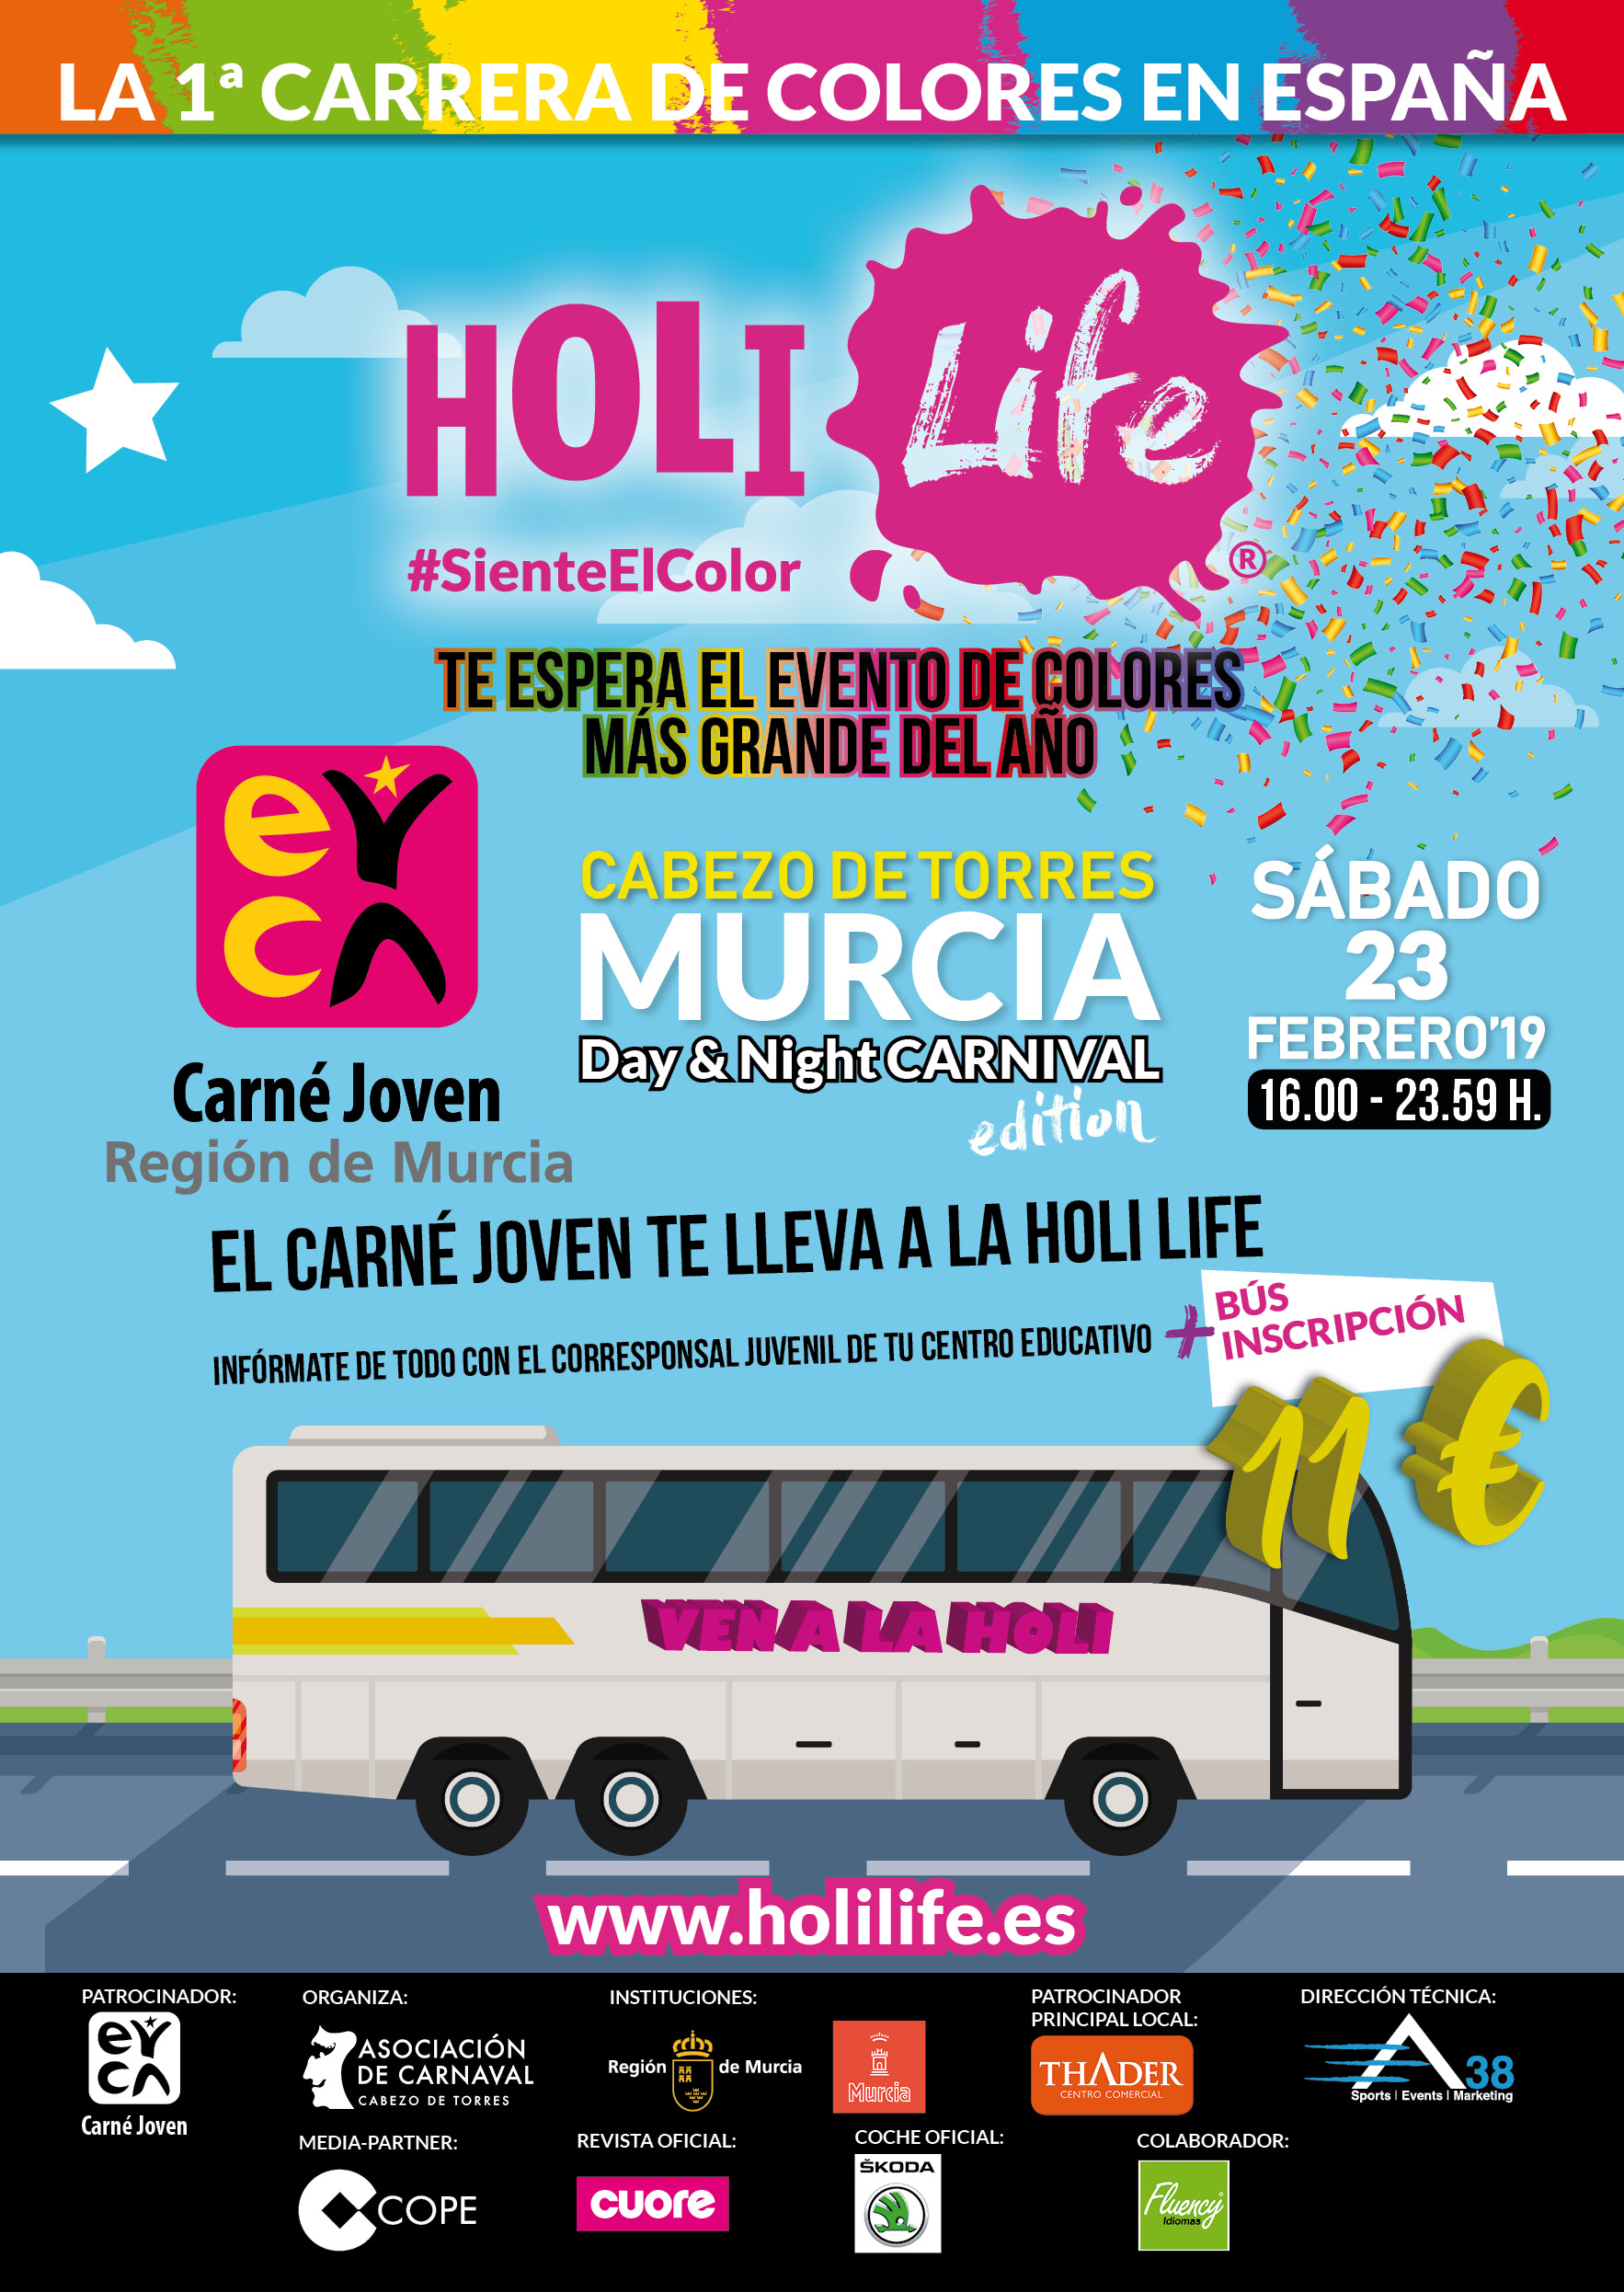 Holi Life Murcia Cabezo de Torres a través de Carné Joven Región de Murcia